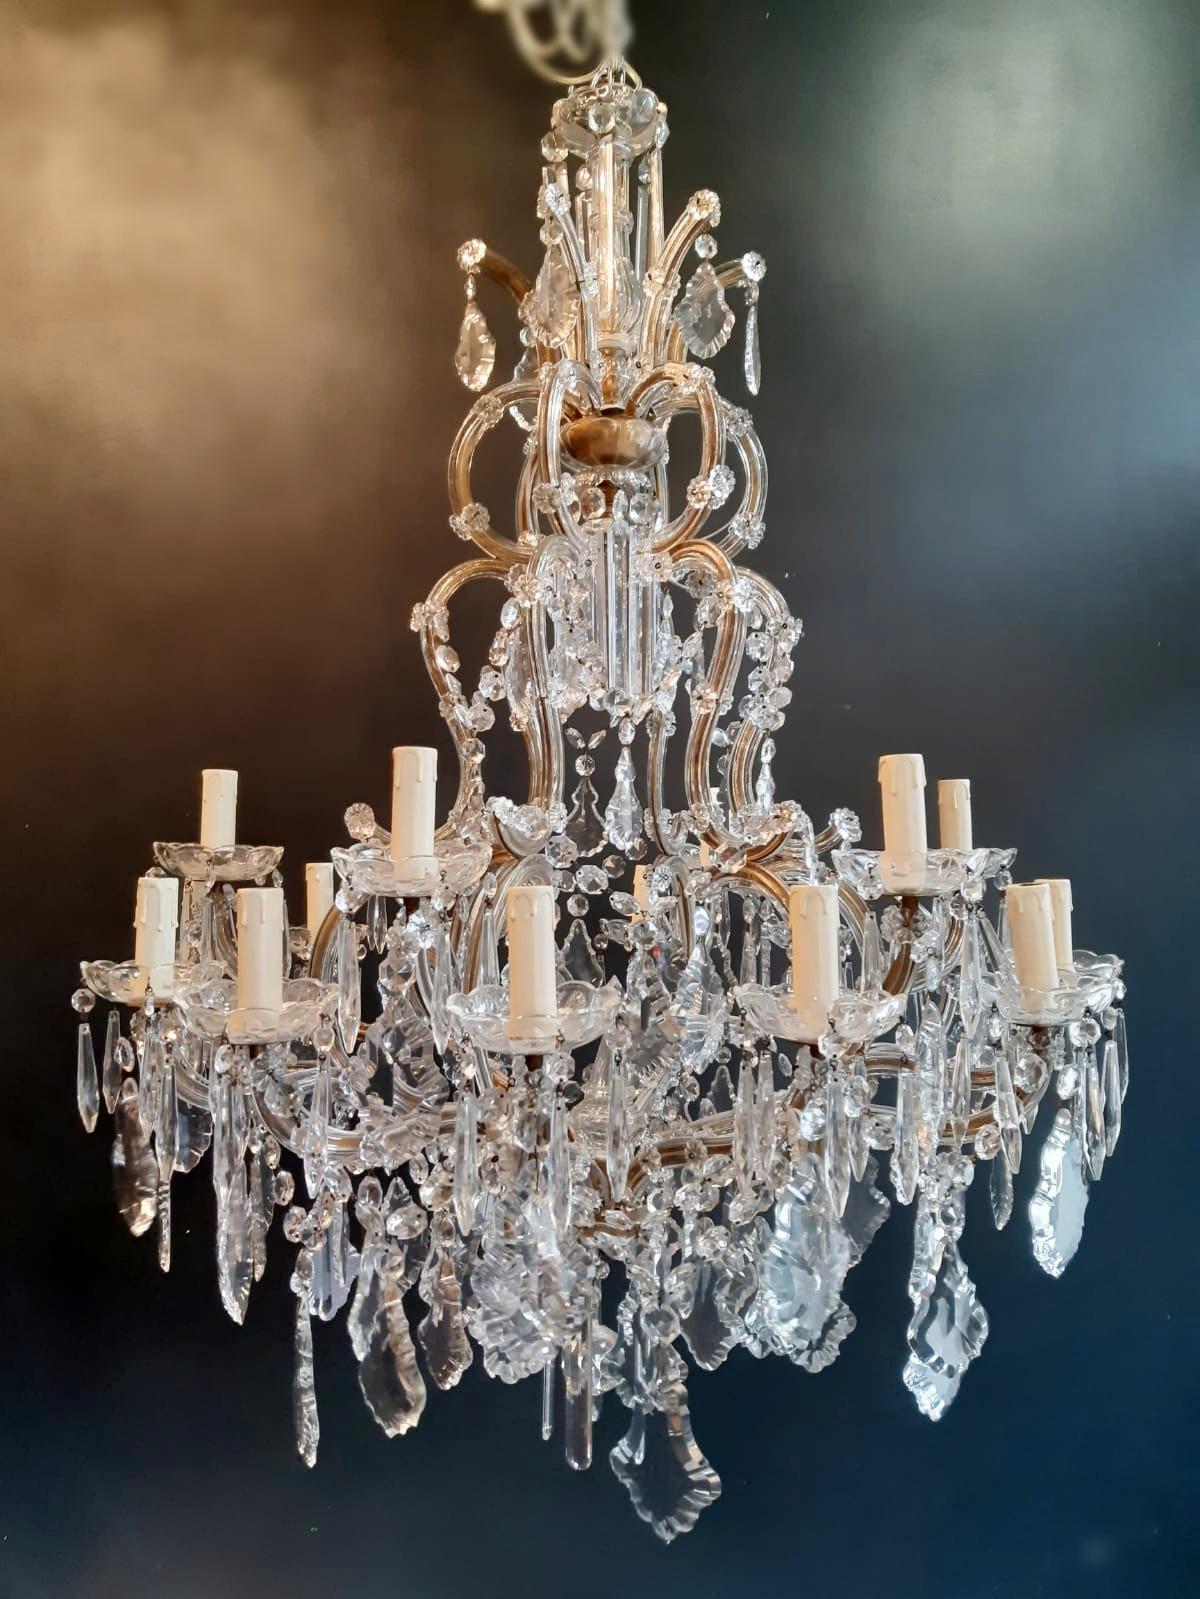 Nineteen-Light Maria Theresa Chandelier Antique Ceiling Lamp Lustre Art Nouveau (Messing)